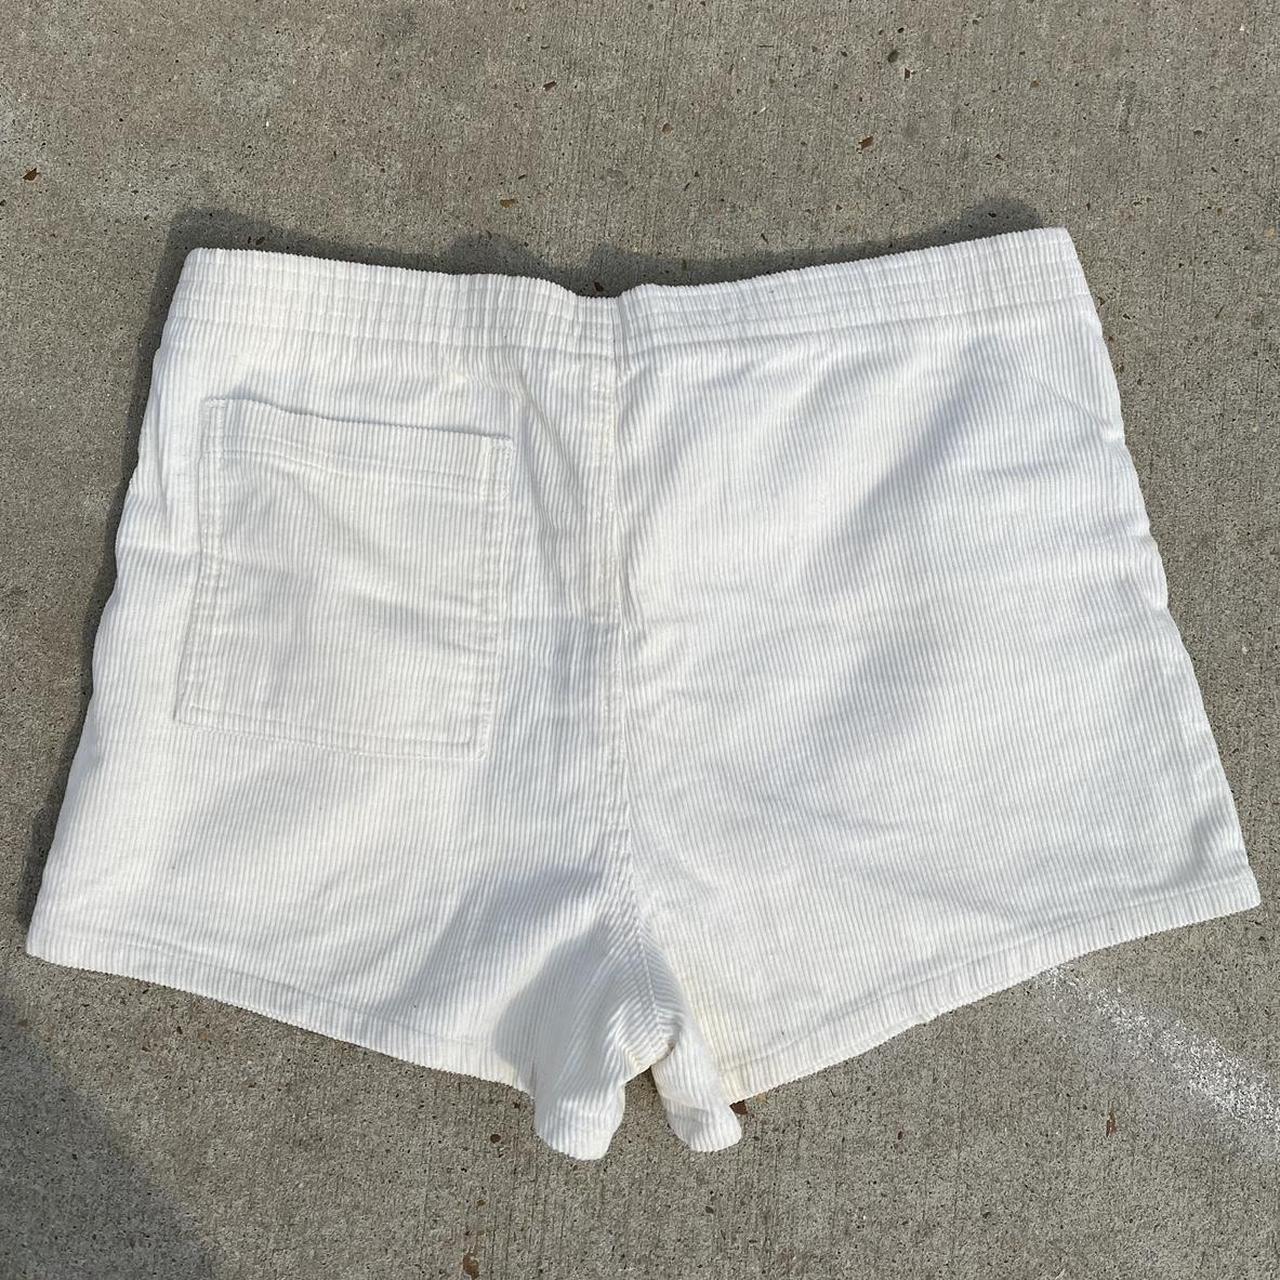 Ocean Pacific Men's White and Cream Shorts | Depop